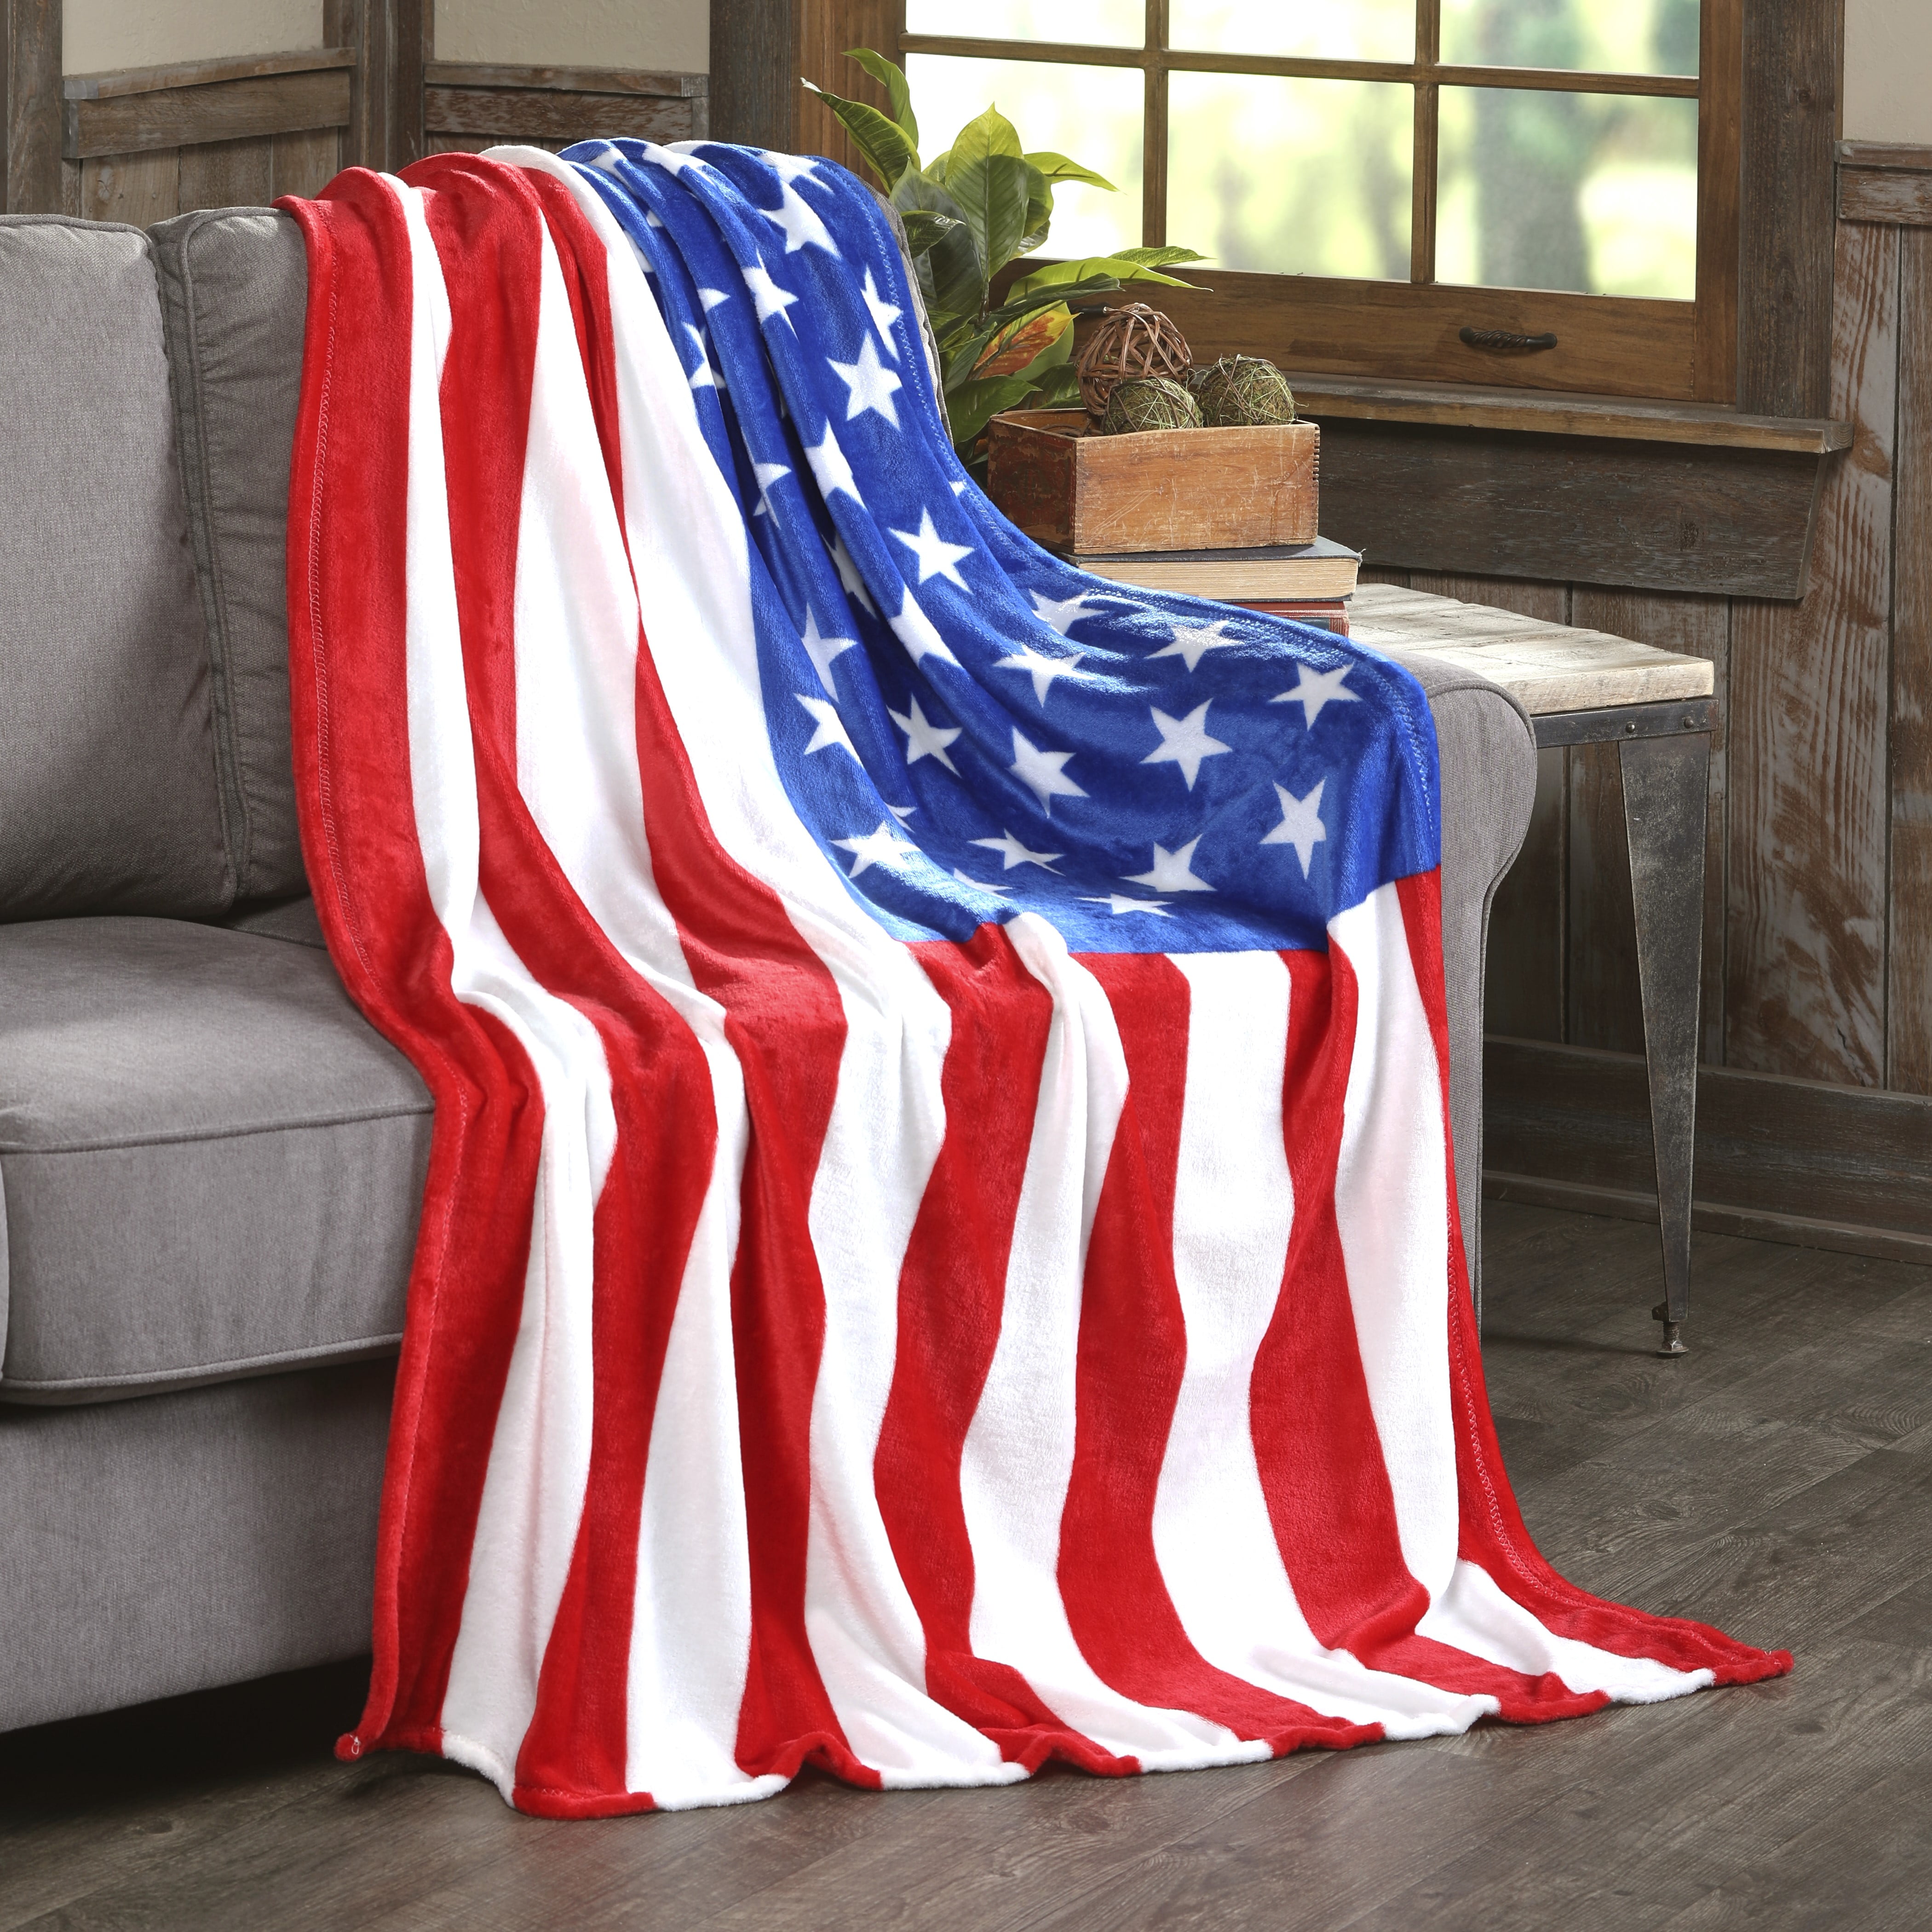 NO SEW Fleece Throw Blanket KIT American Flag Red White Blue 48